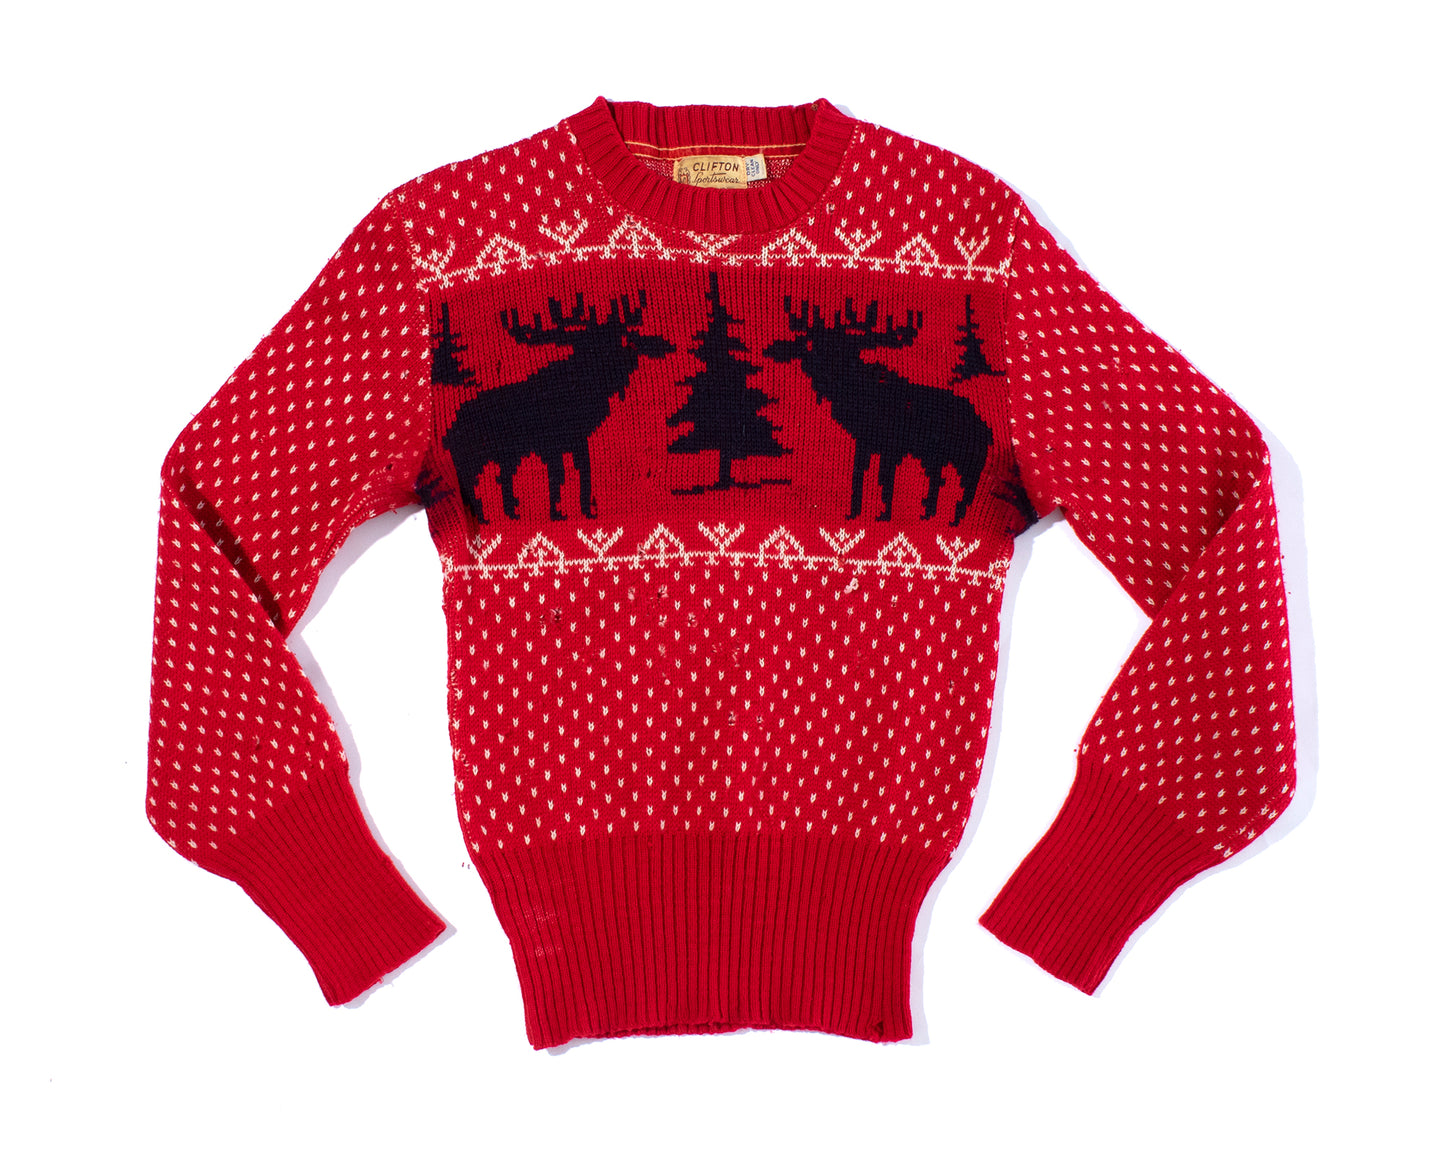 Vintage 40s 1940s Reindeer Knit Wool Holiday Christmas Red Sweater Birthday Life Vintage